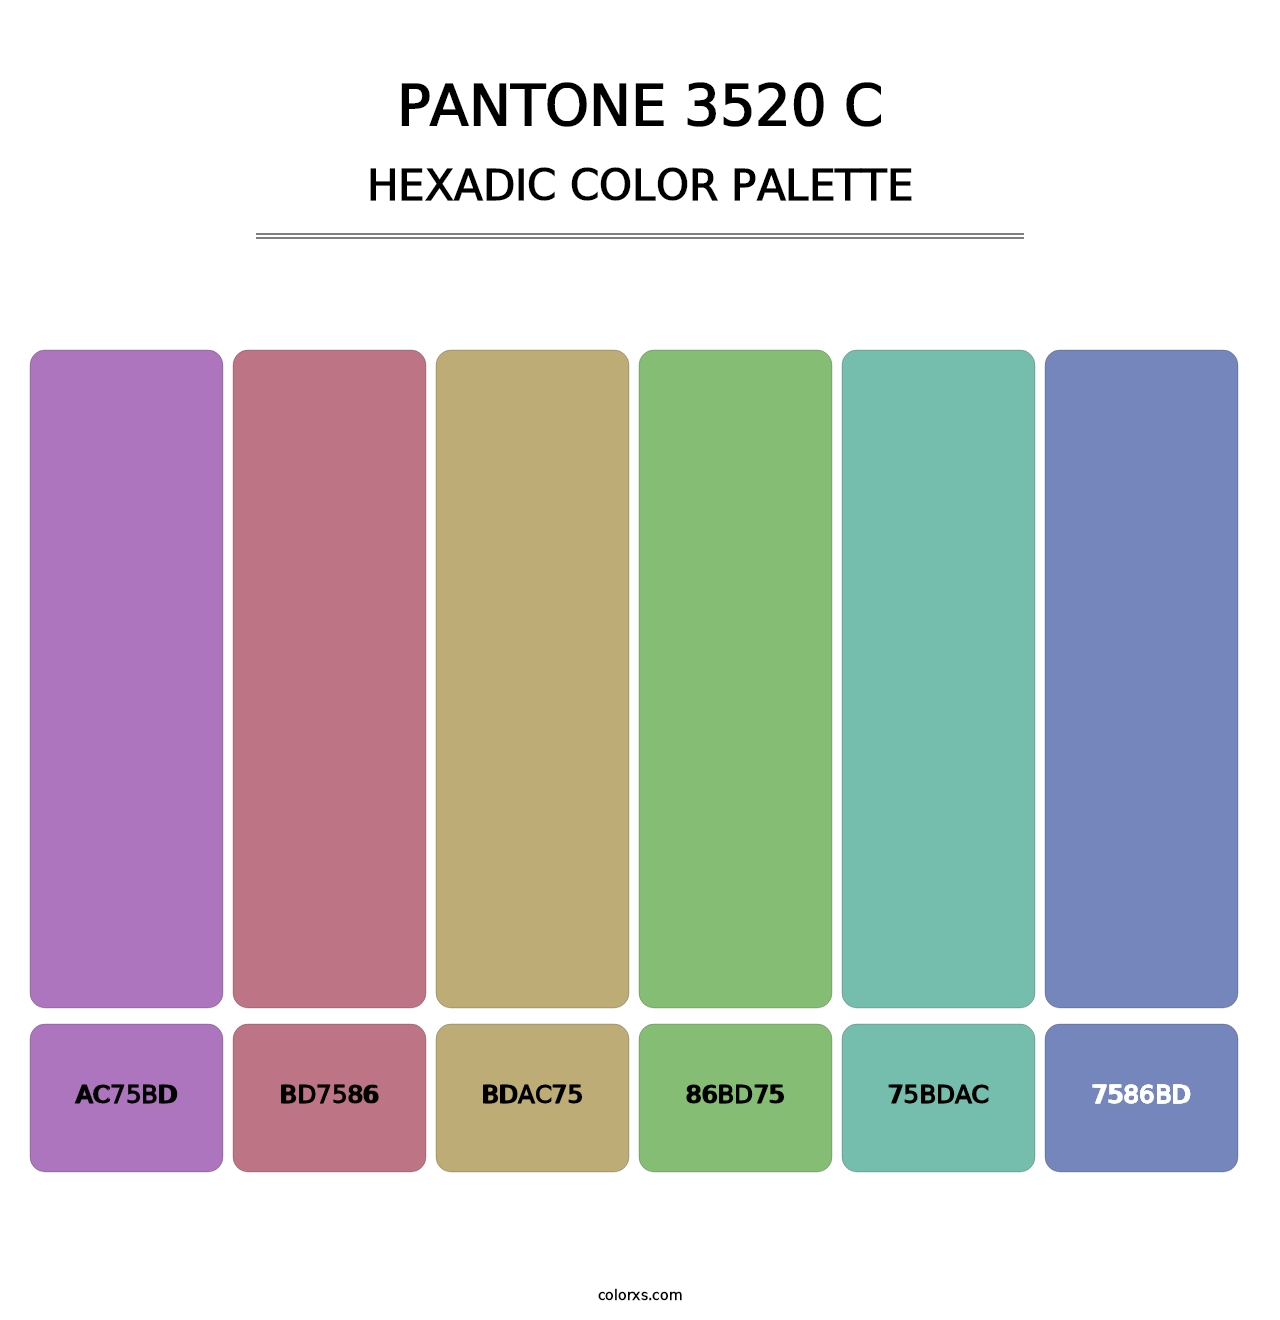 PANTONE 3520 C - Hexadic Color Palette